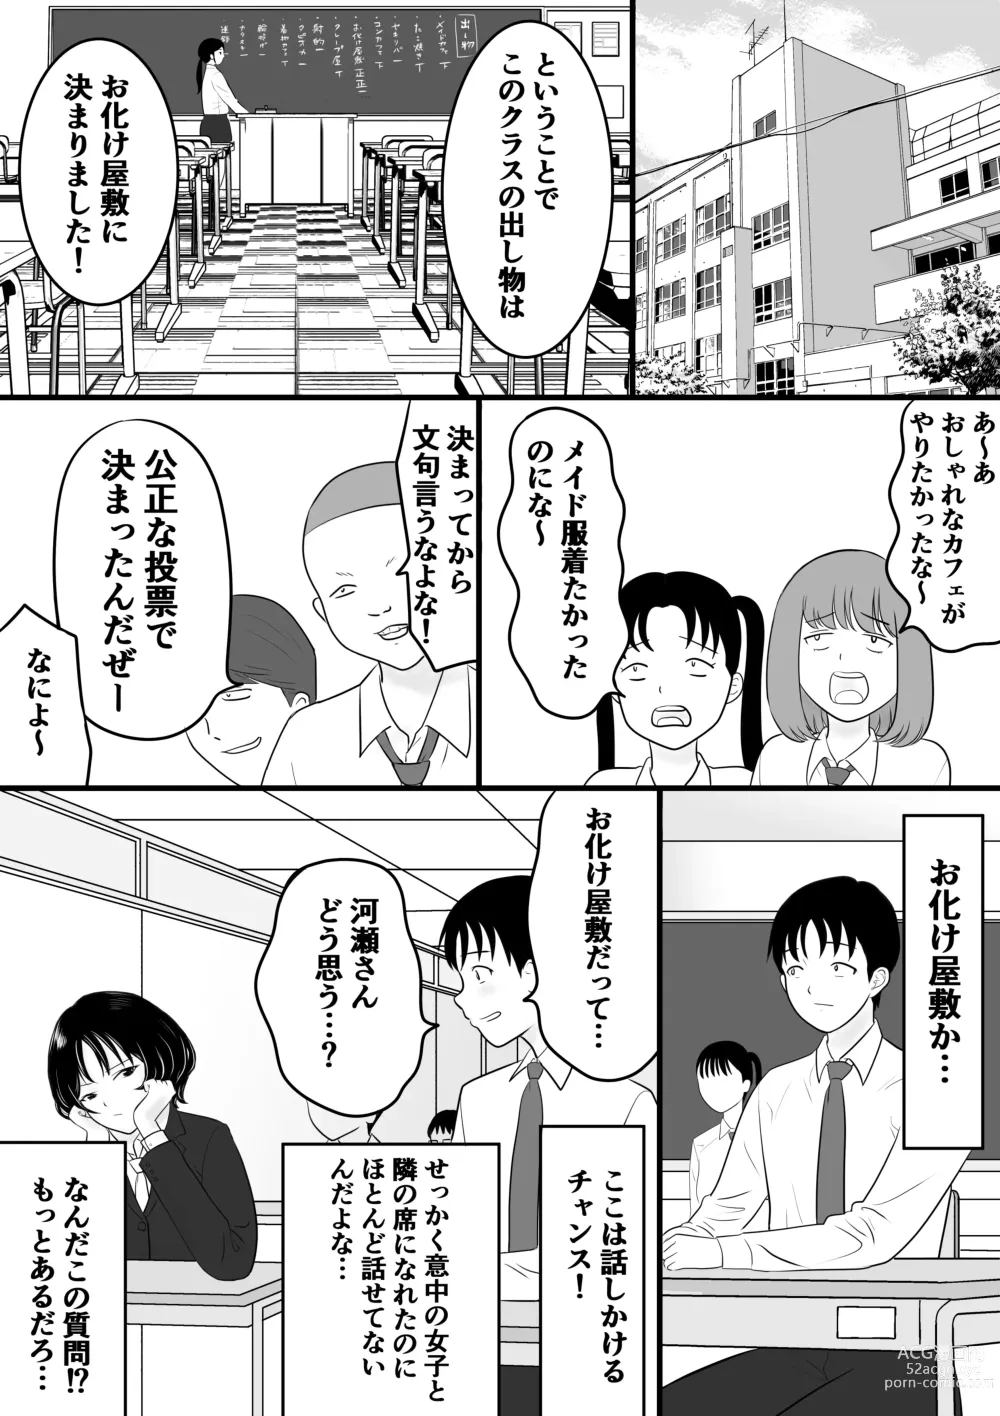 Page 3 of doujinshi Gakusai